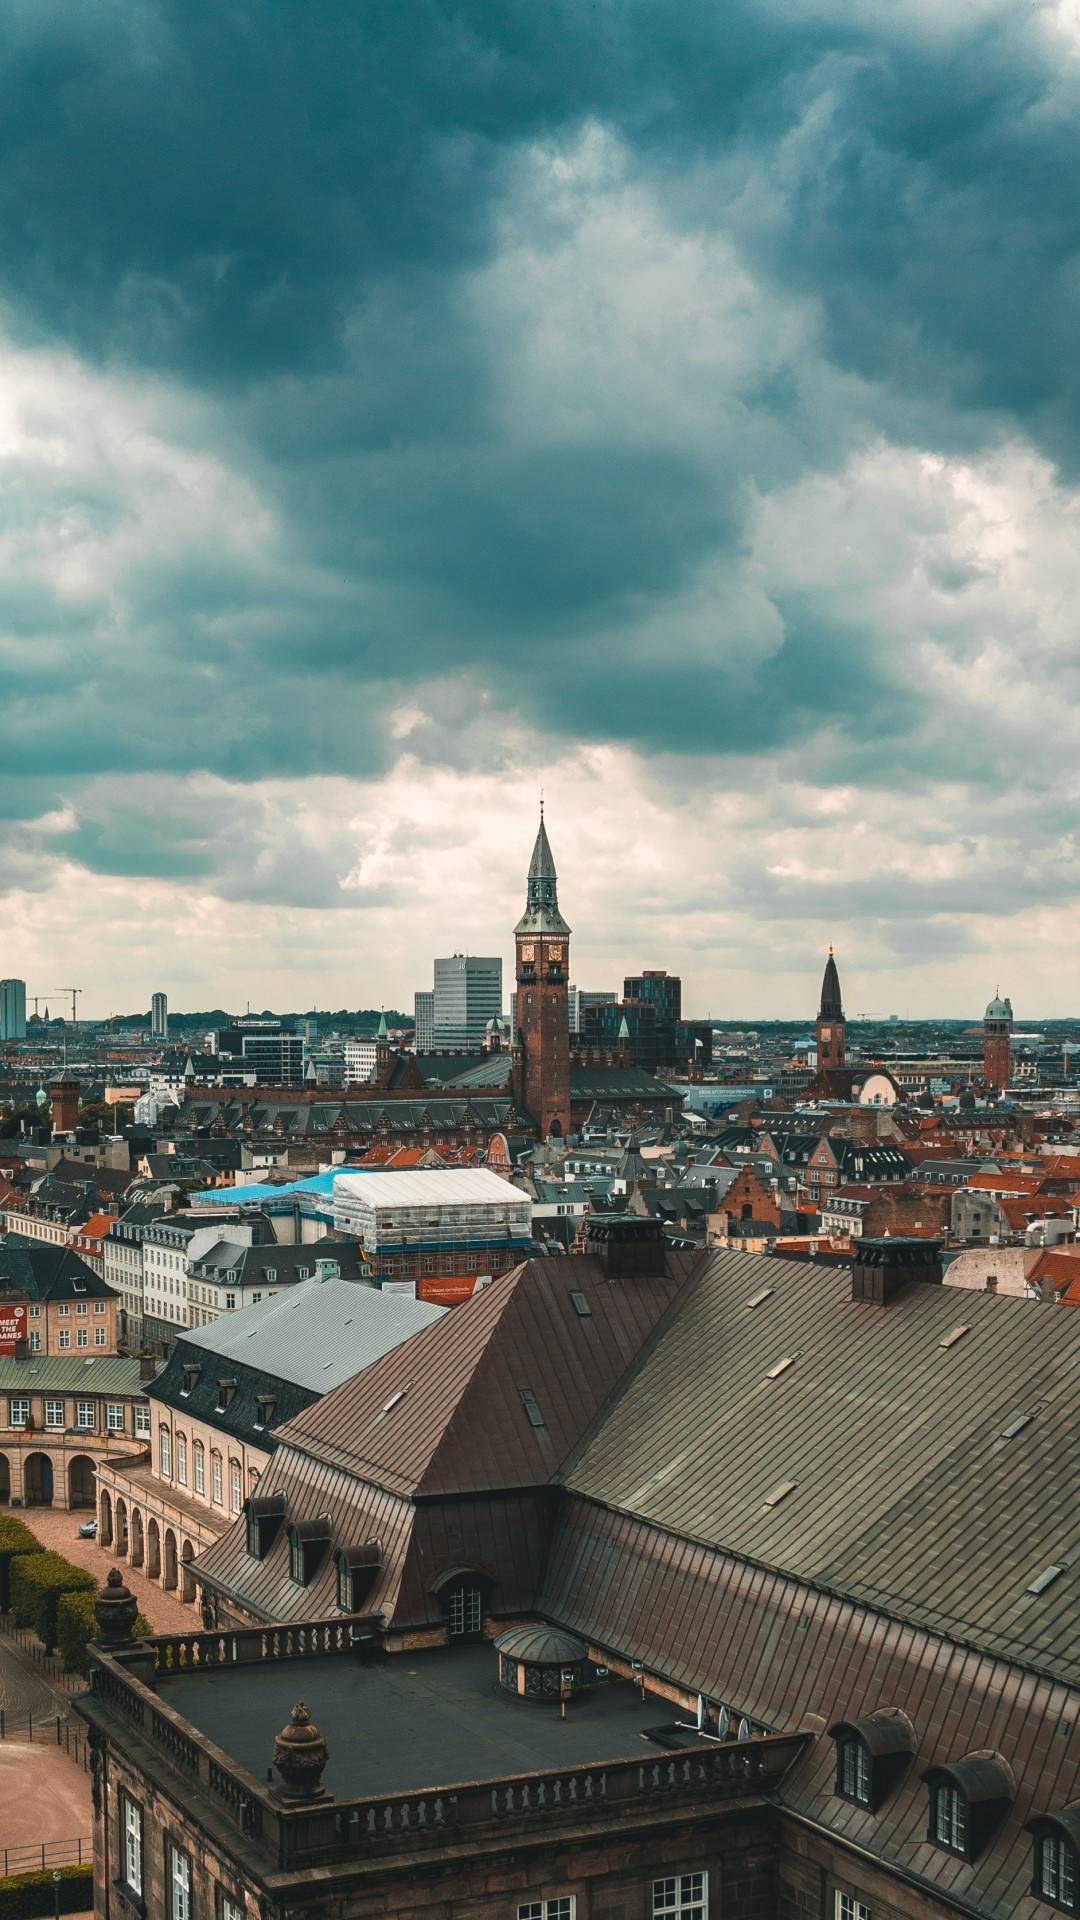 Architectural marvels of Copenhagen, Impressive skyline, Cloud-filled backdrop, Wallpaper-worthy, 1080x1920 Full HD Phone